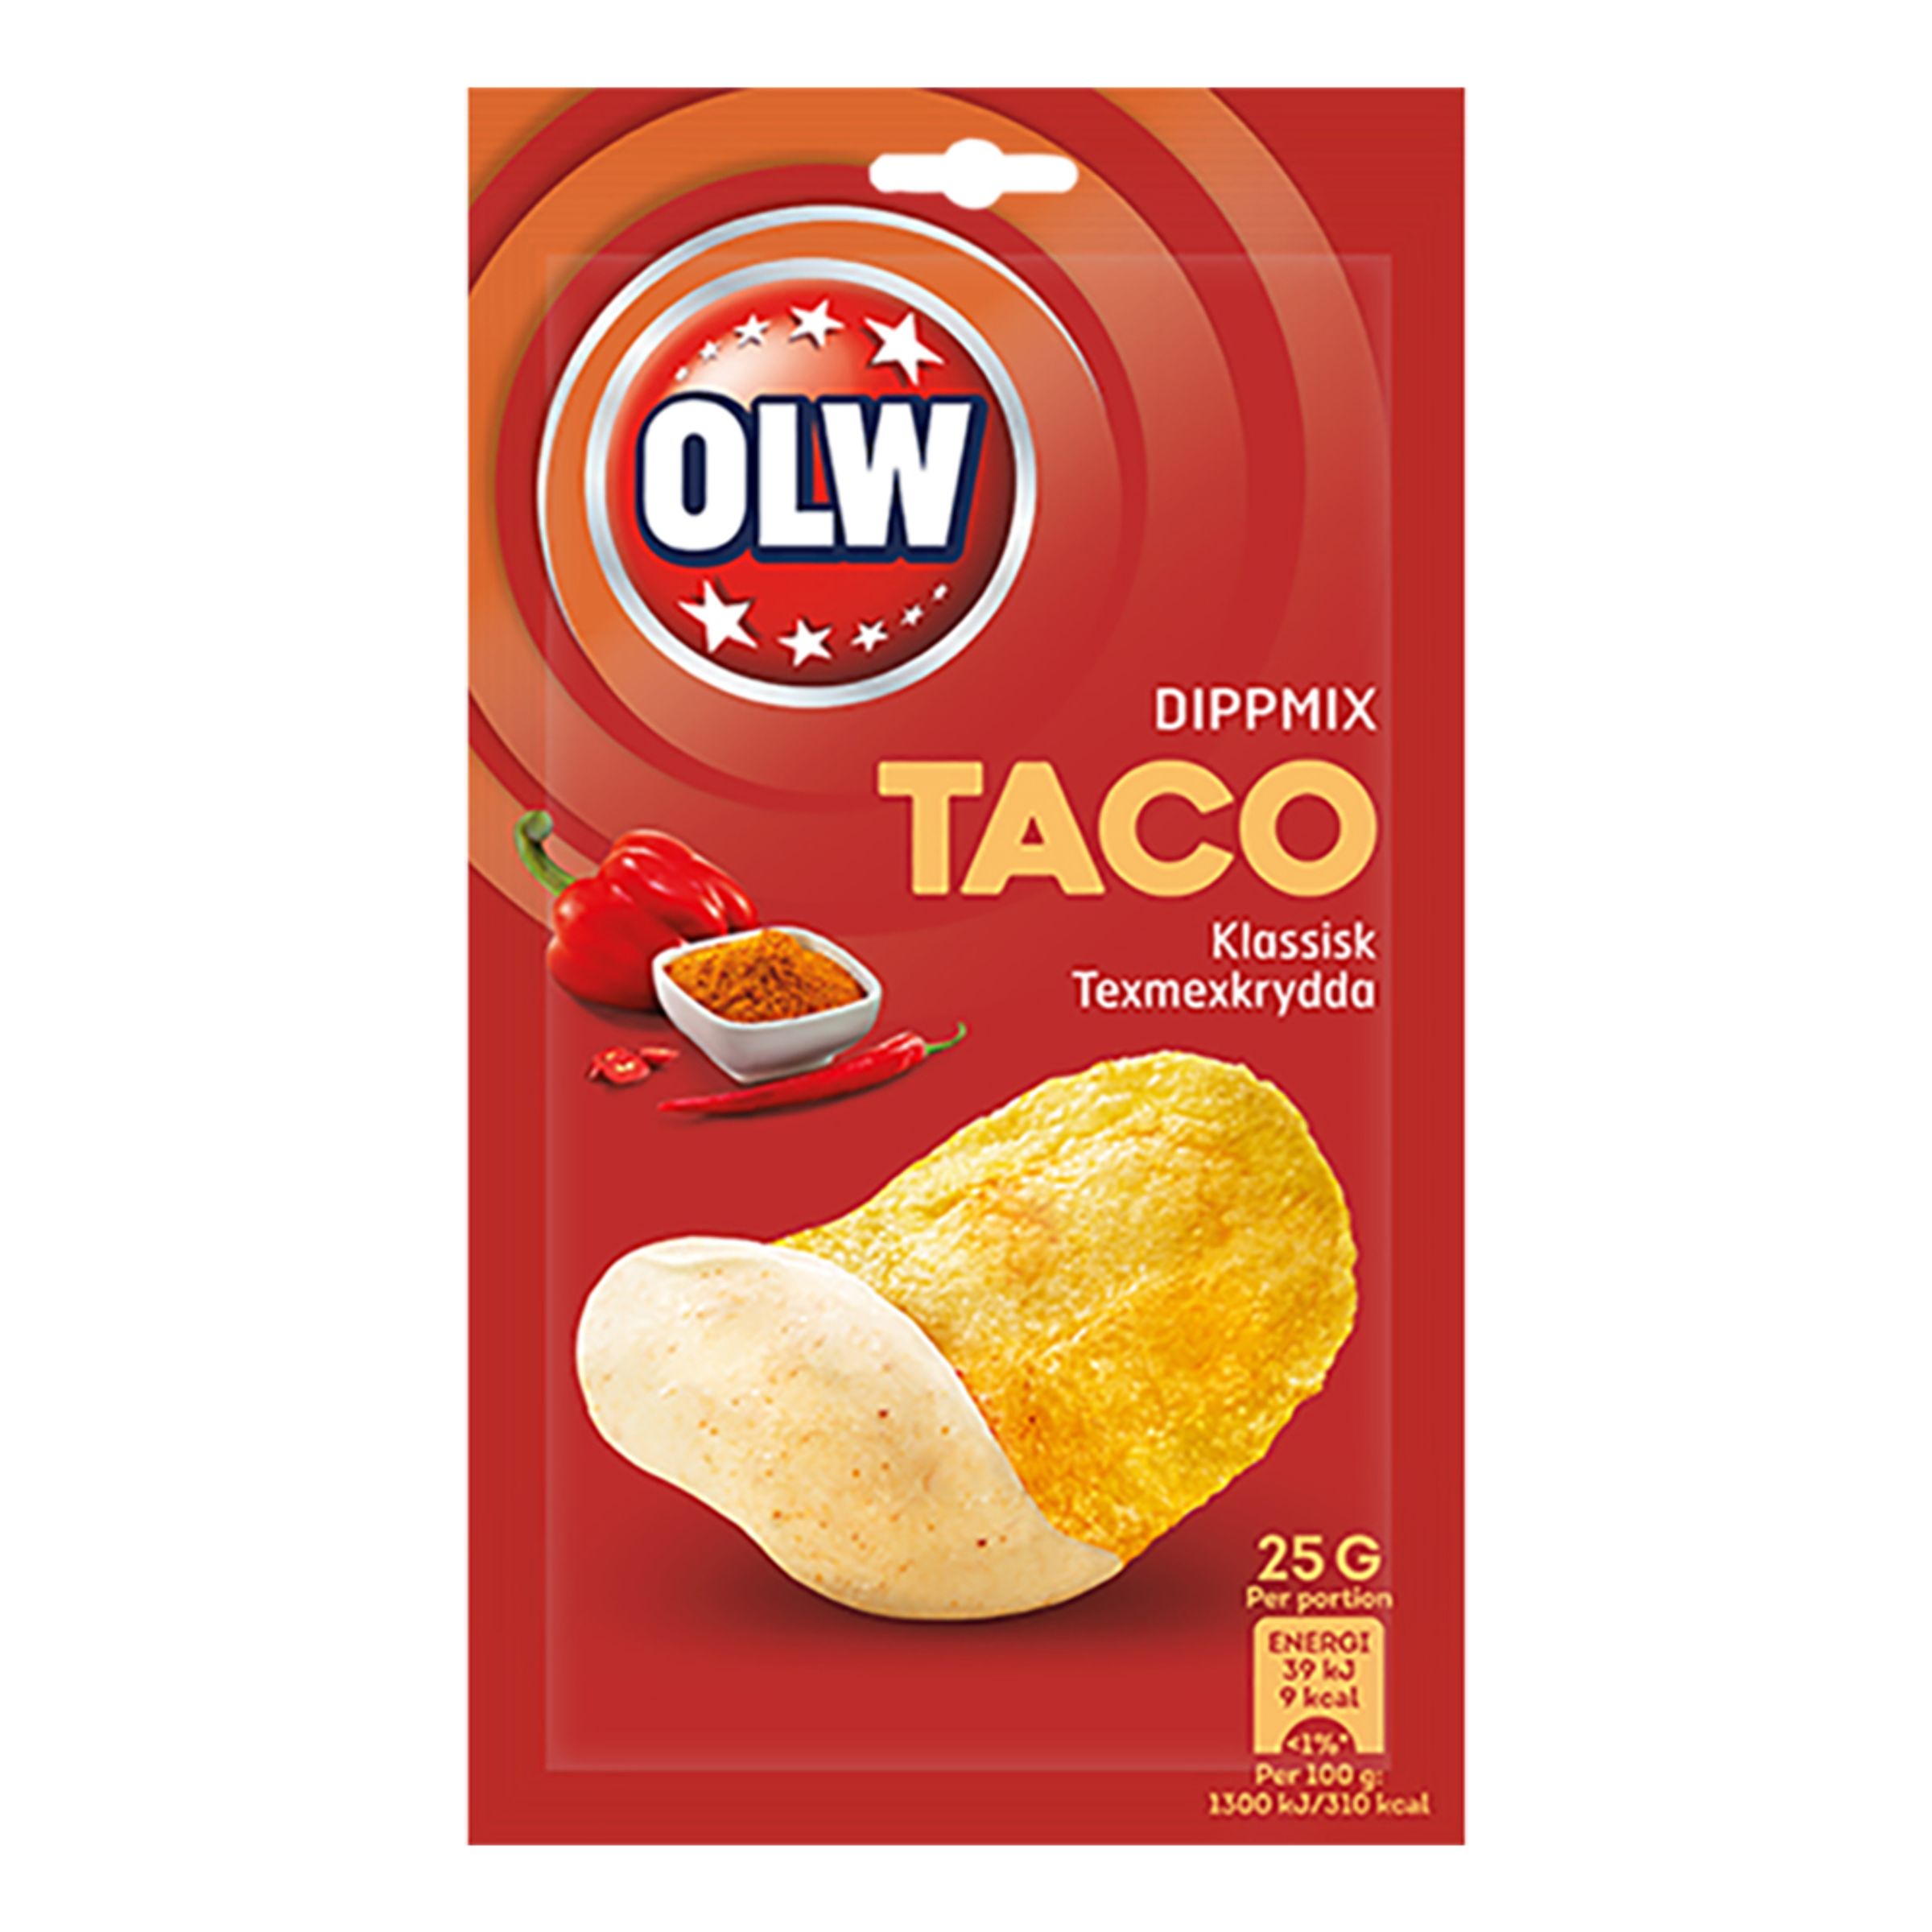 OLW Dippmix Taco - 25 gram